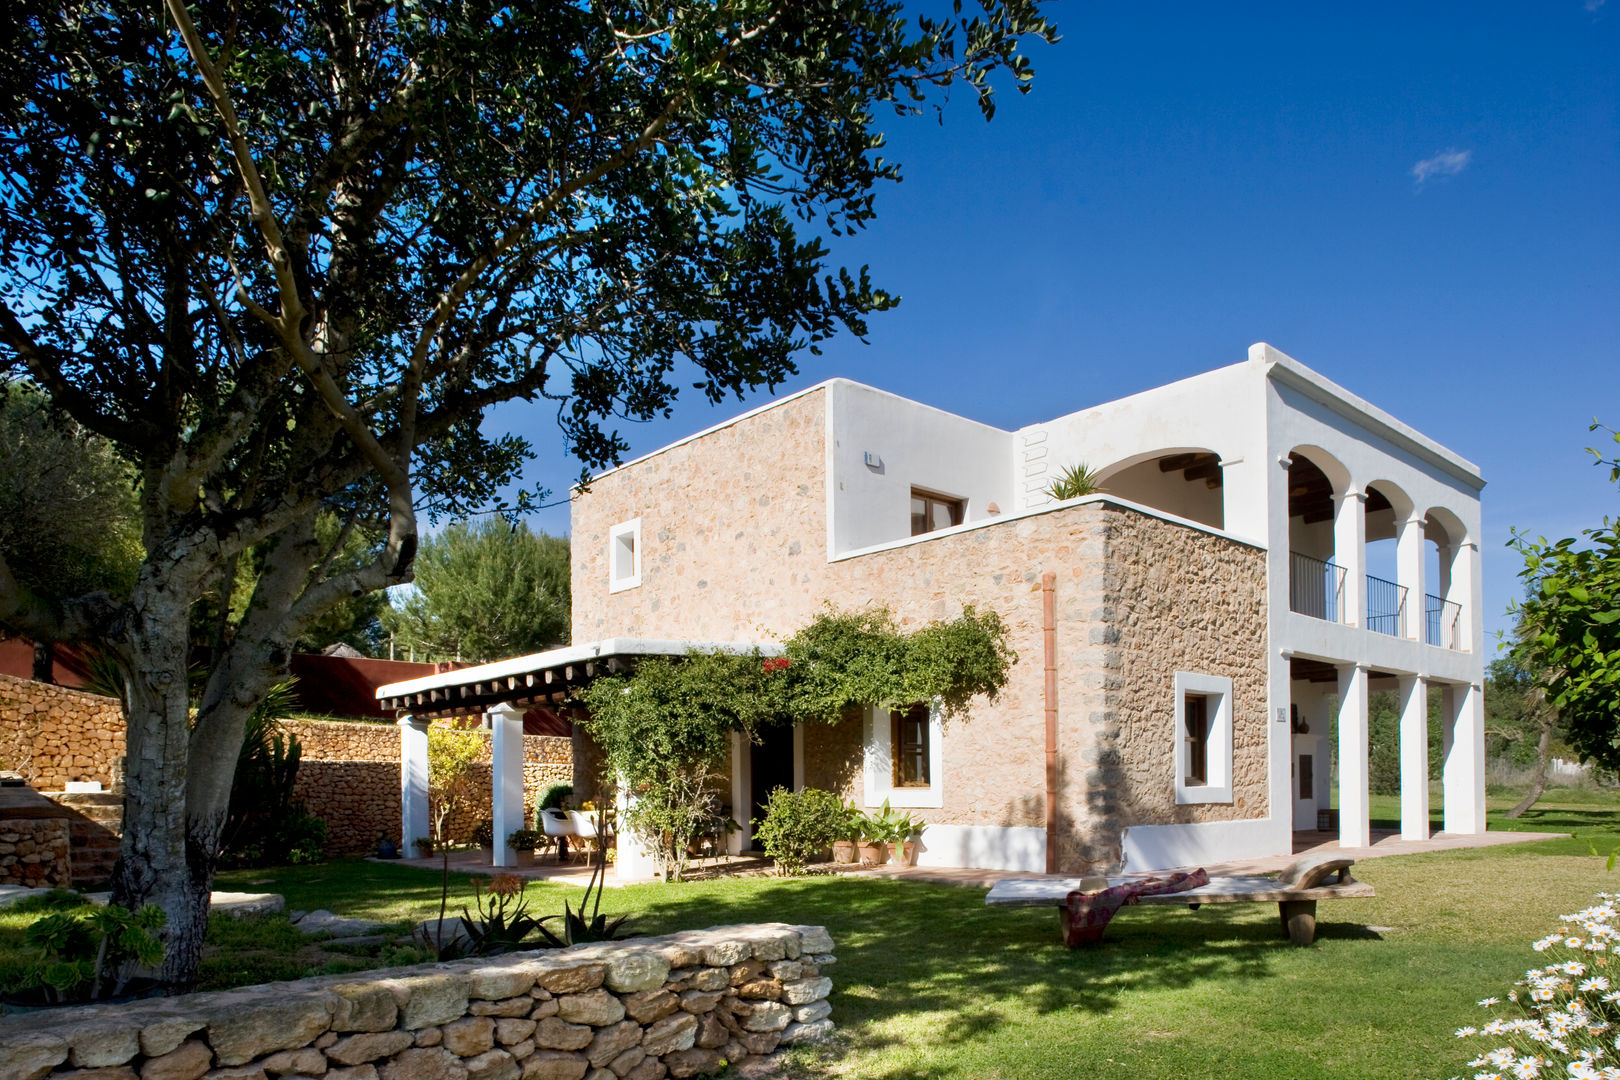 Casa en Ibiza, recdi8 recdi8 컨트리스타일 주택